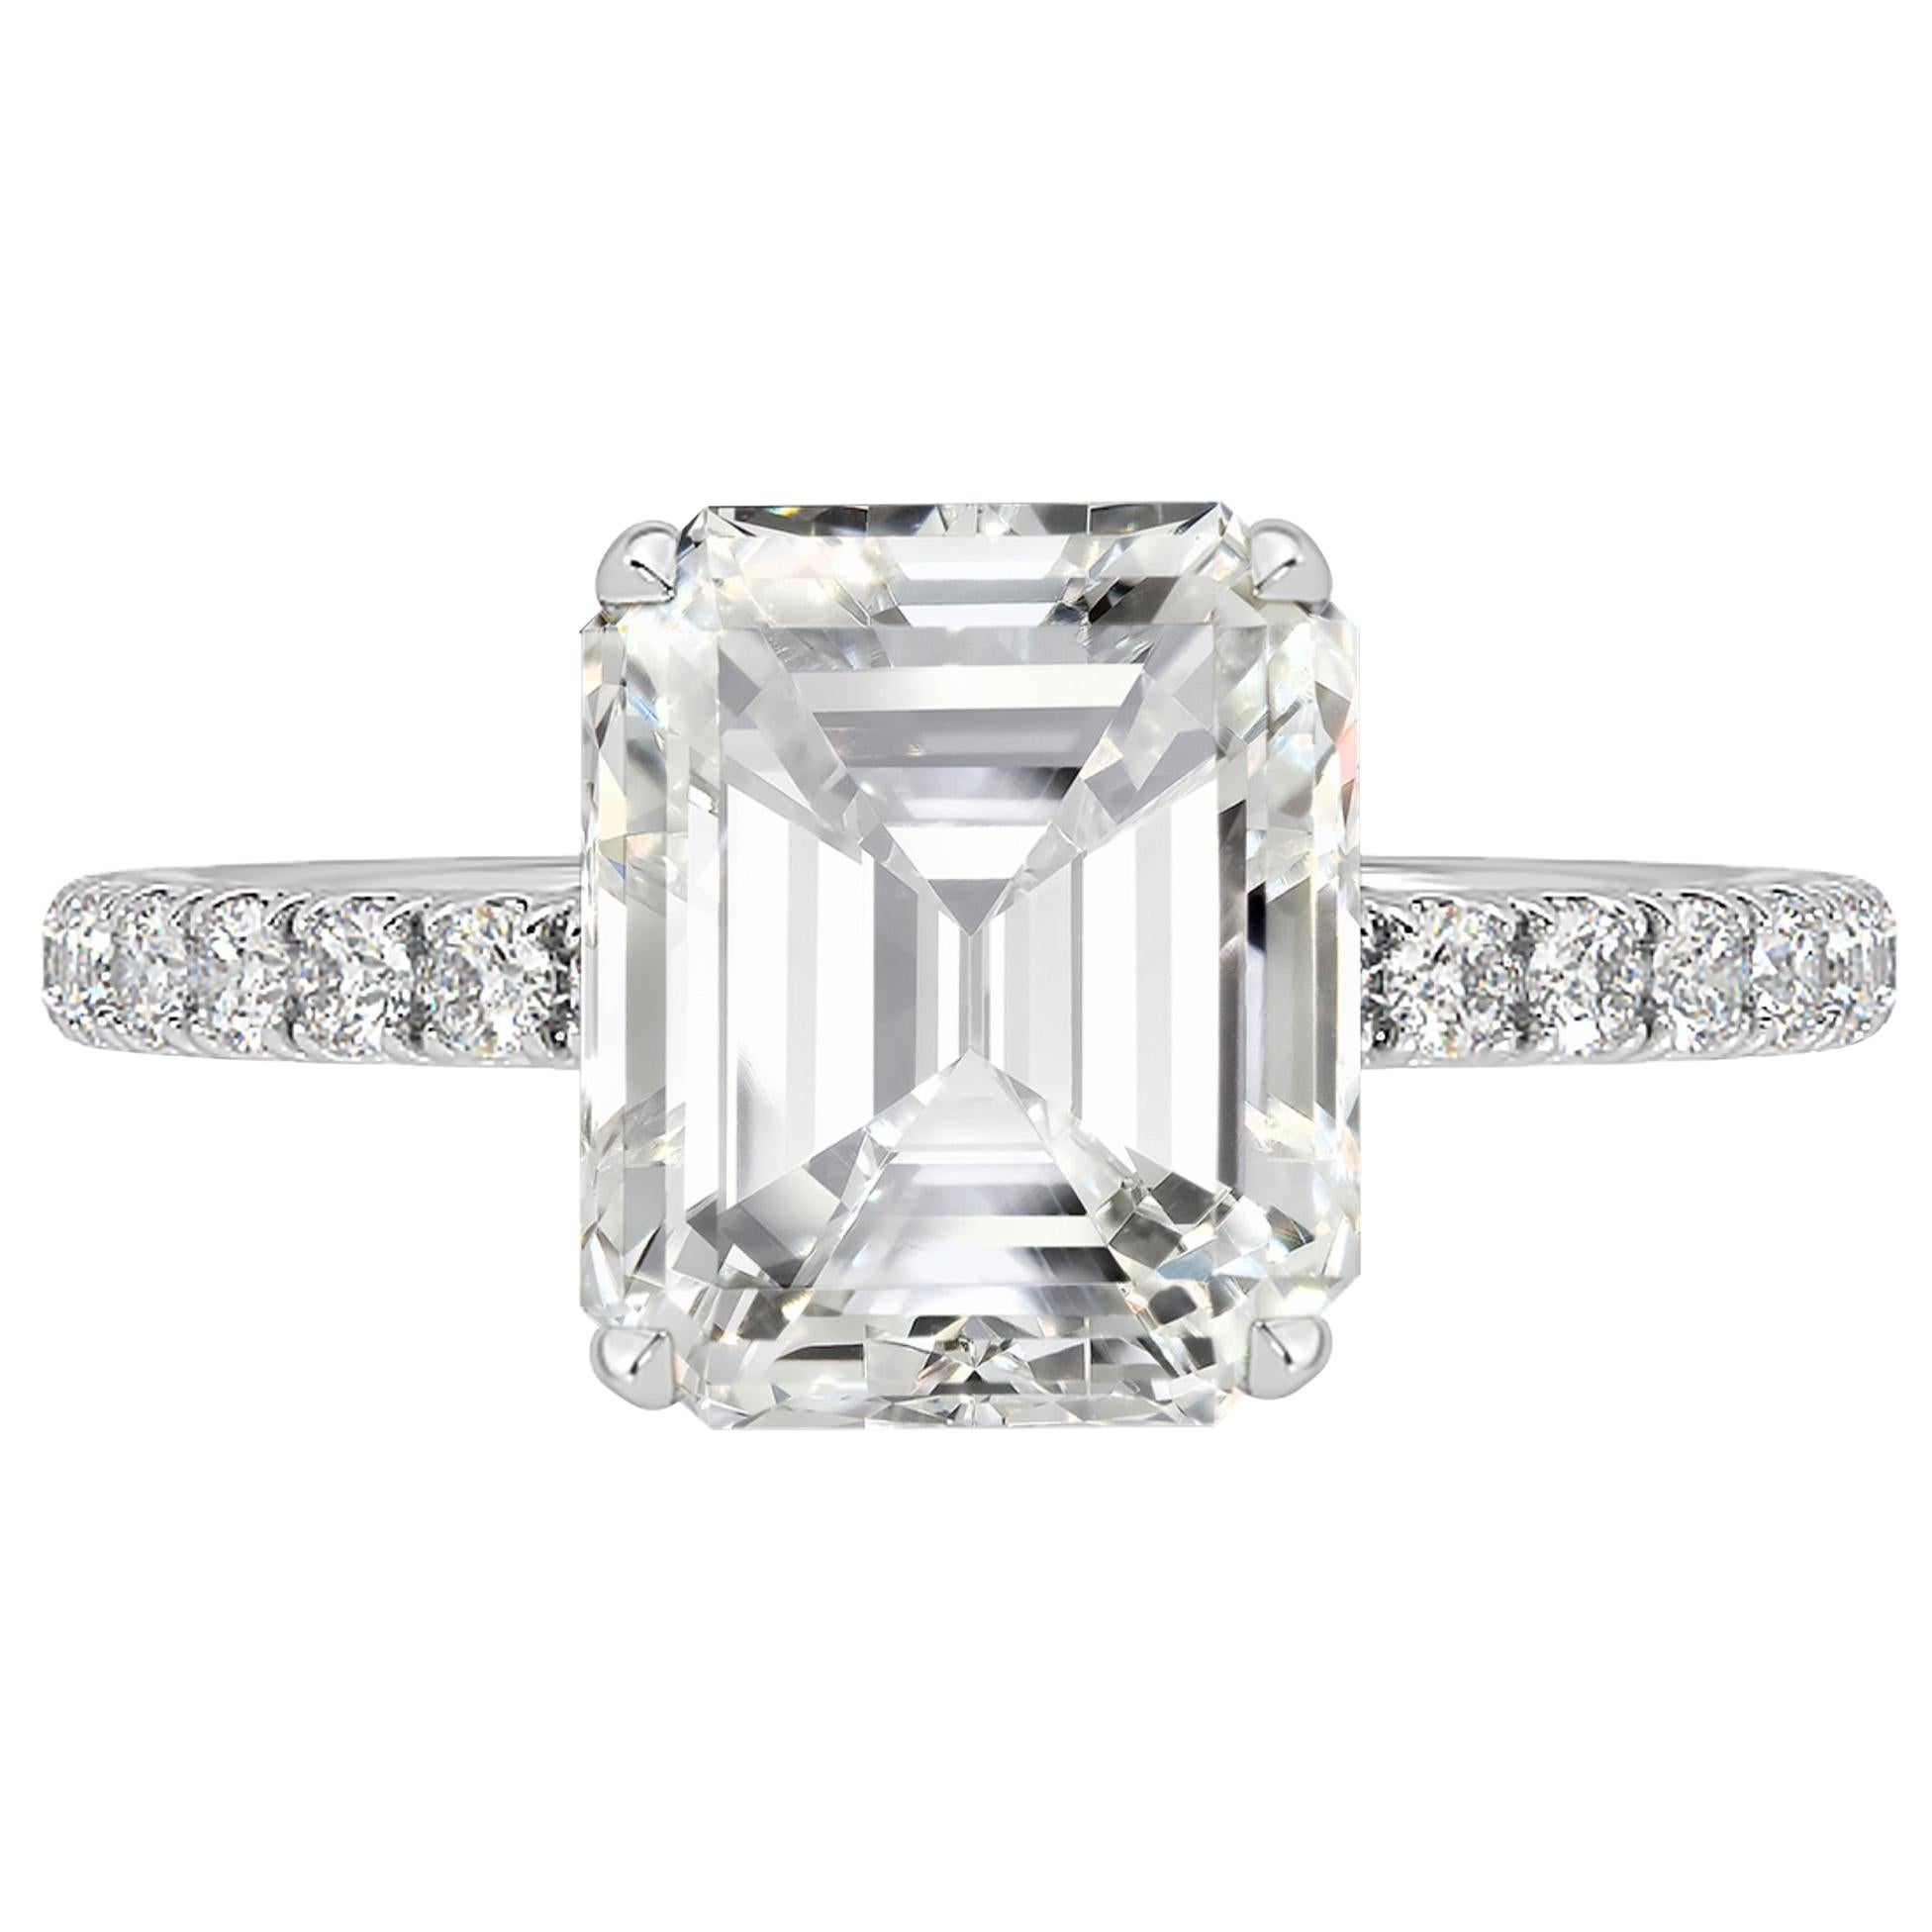 GIA Certified 3.01 Carat G VVS2 Diamond Ring For Sale